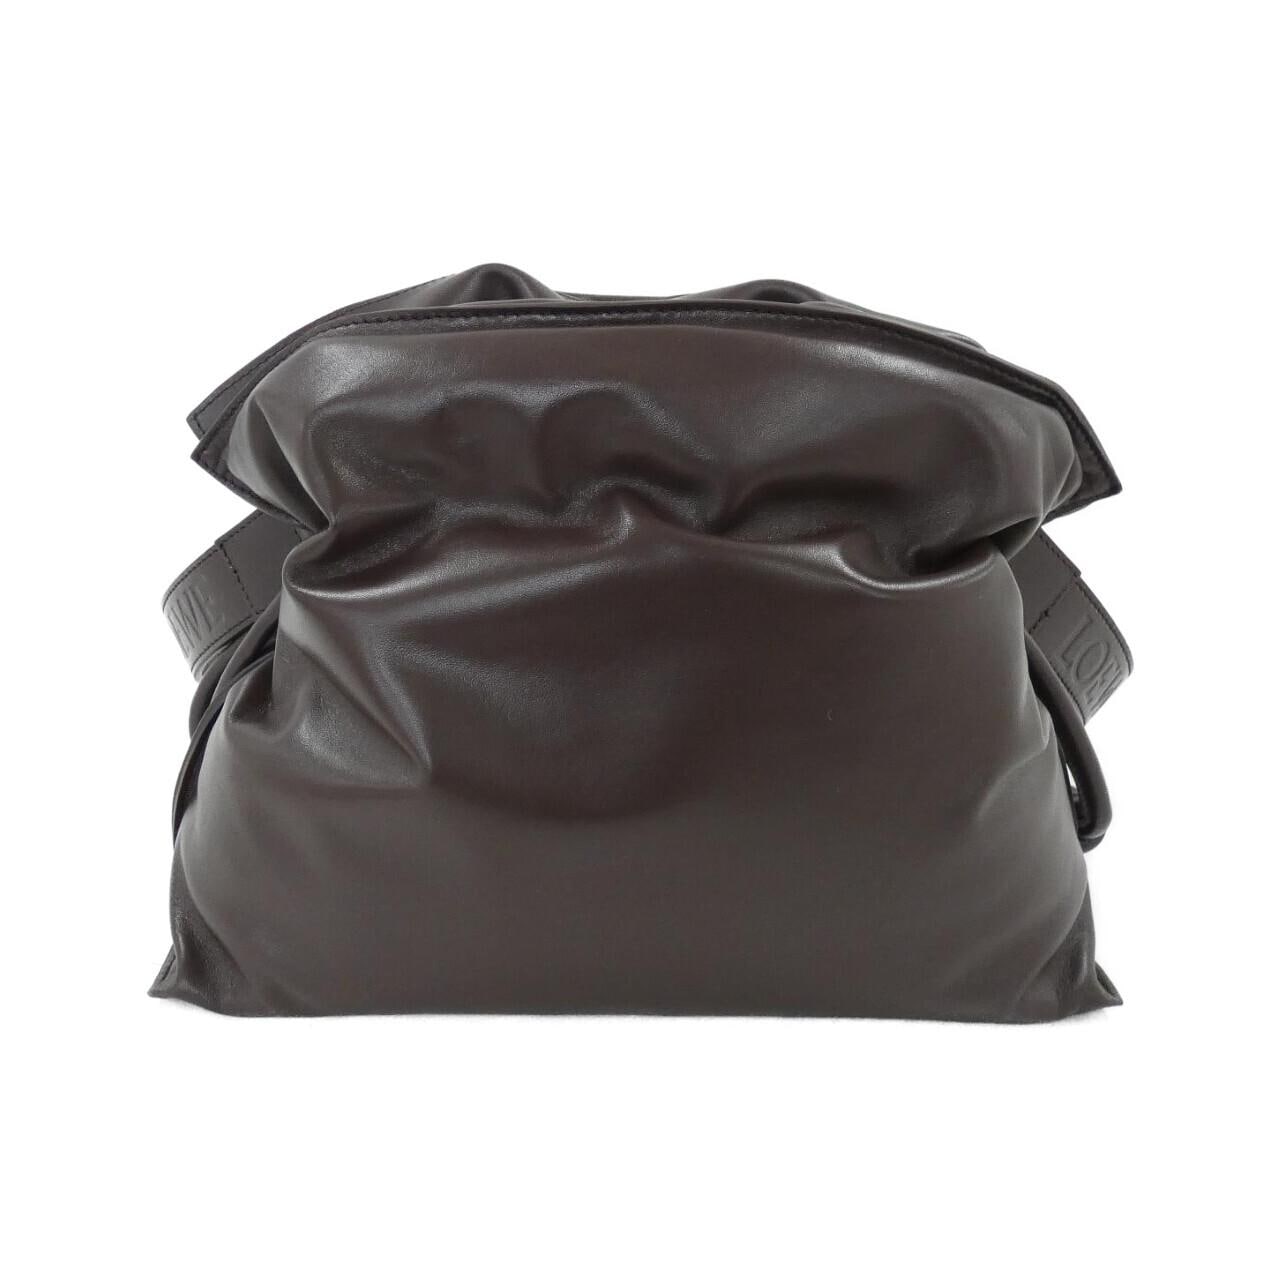 [BRAND NEW] Loewe Puffer Flamenco Clutch A411FC1X67 Shoulder Bag